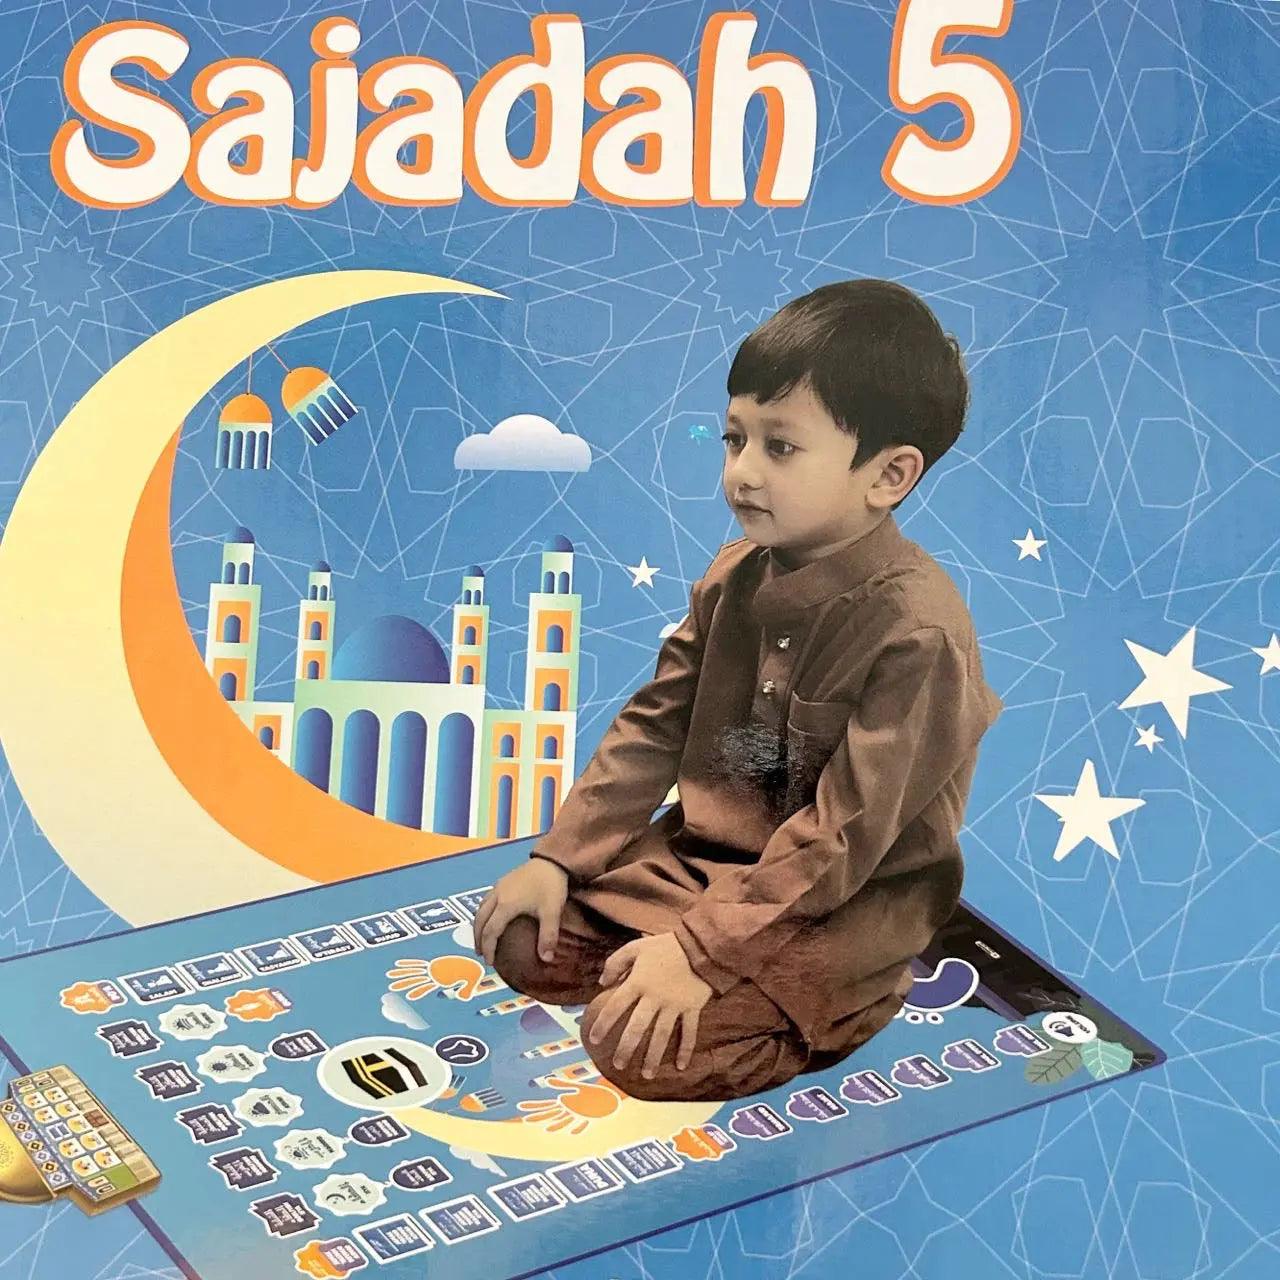 MR032 Electronic Interactive Children Prayer Mat, Islam Kids Educational Prayer Carpet - Mariam's Collection